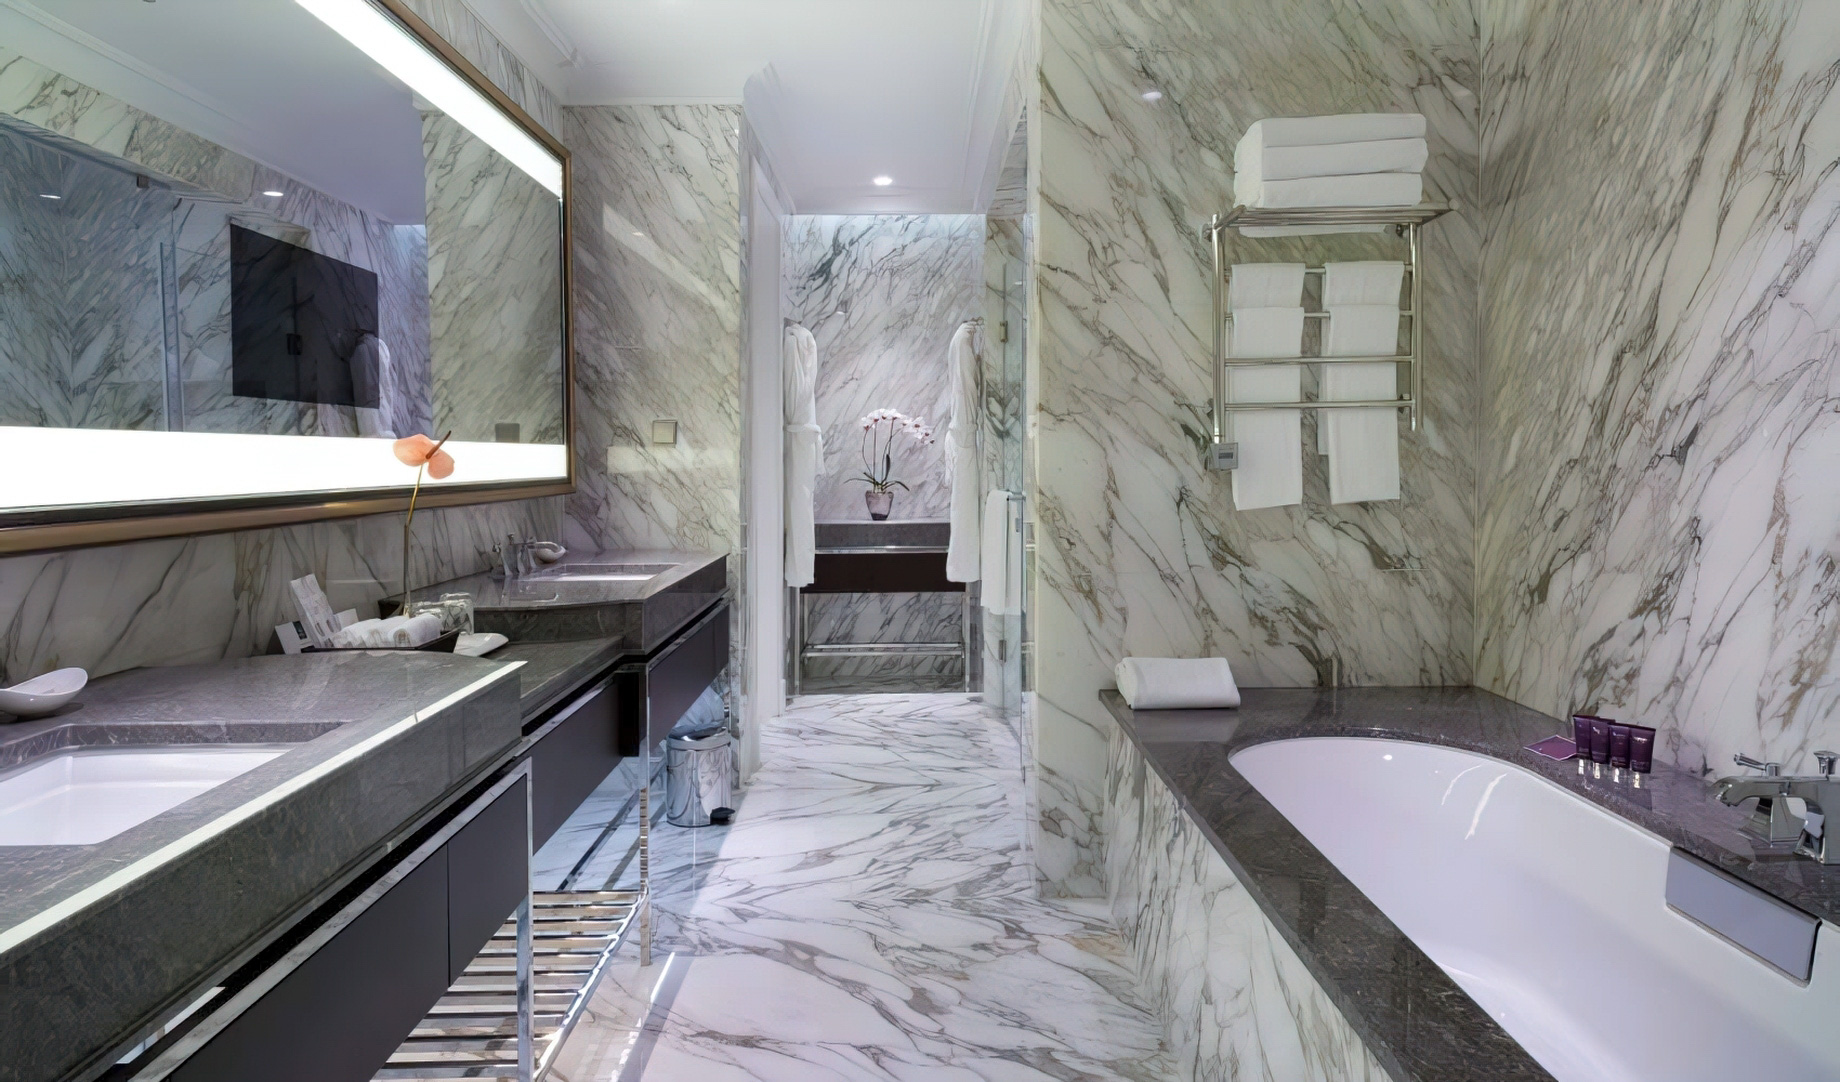 Metropol Hotel Moscow - Moscow, Russia - Ambassador Suite Bathroom